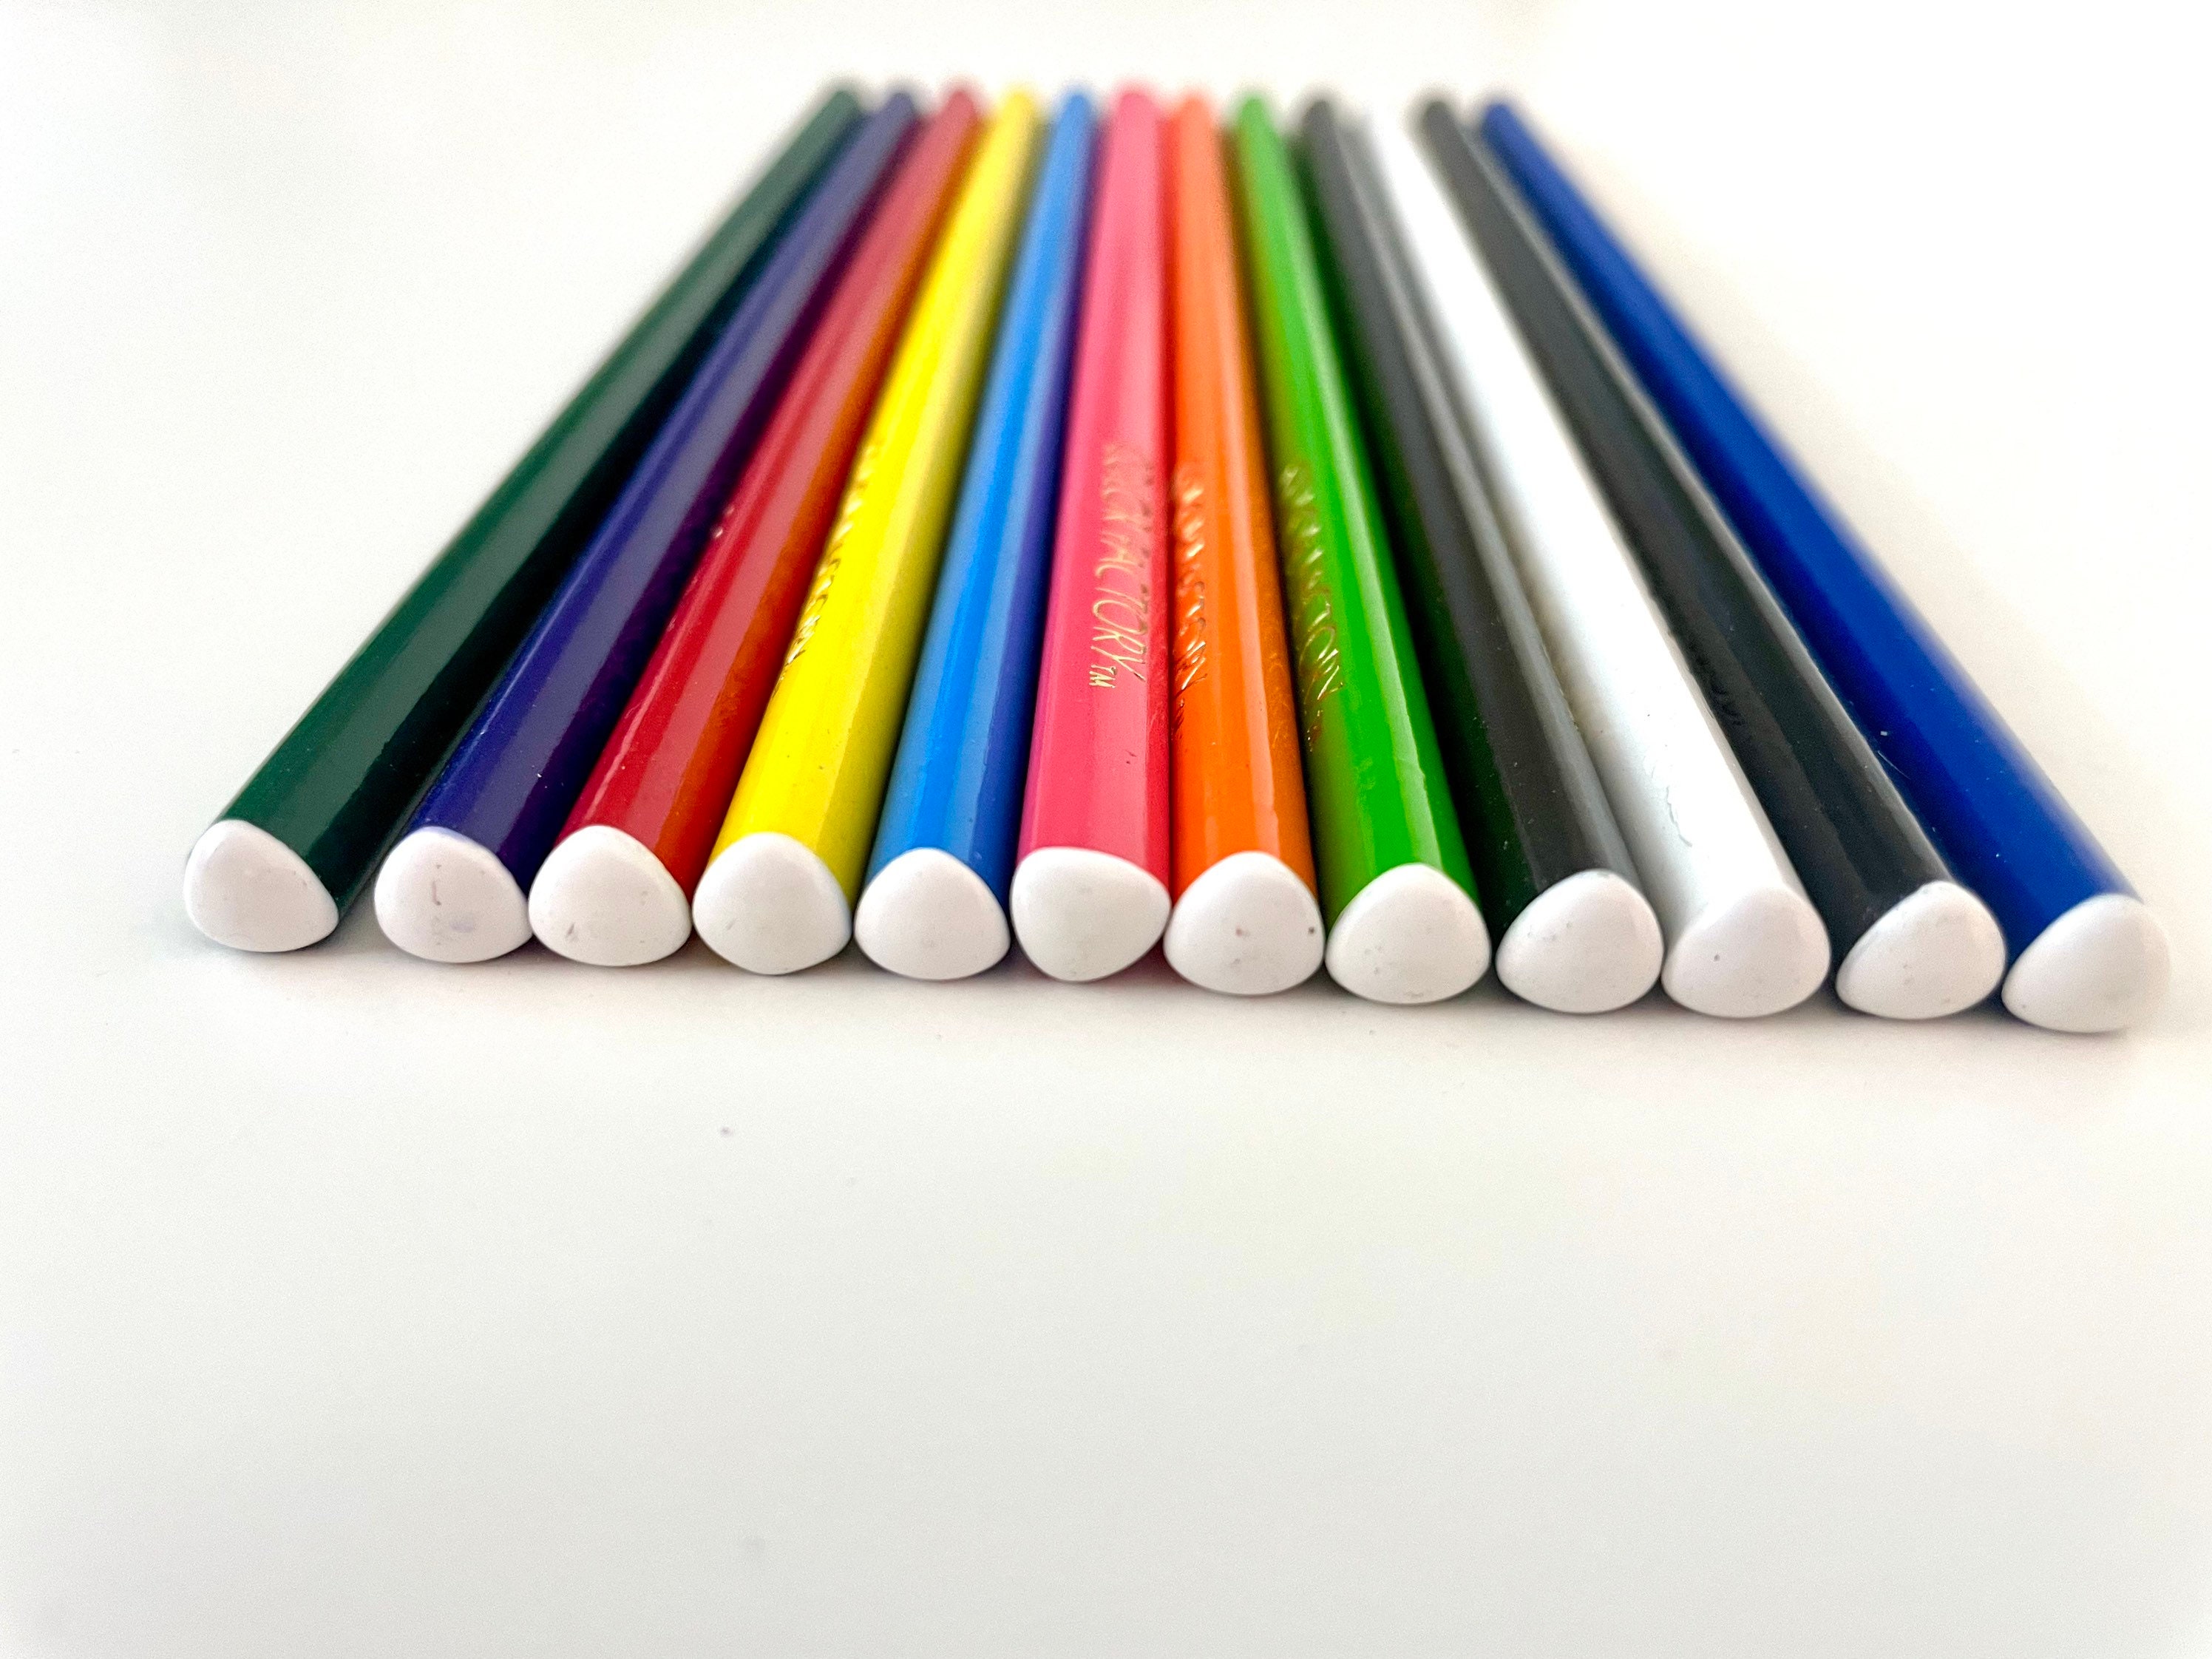 Jolly Supersticks Kinderfest Metallic Colored Pencil Set of 6 From Austria  